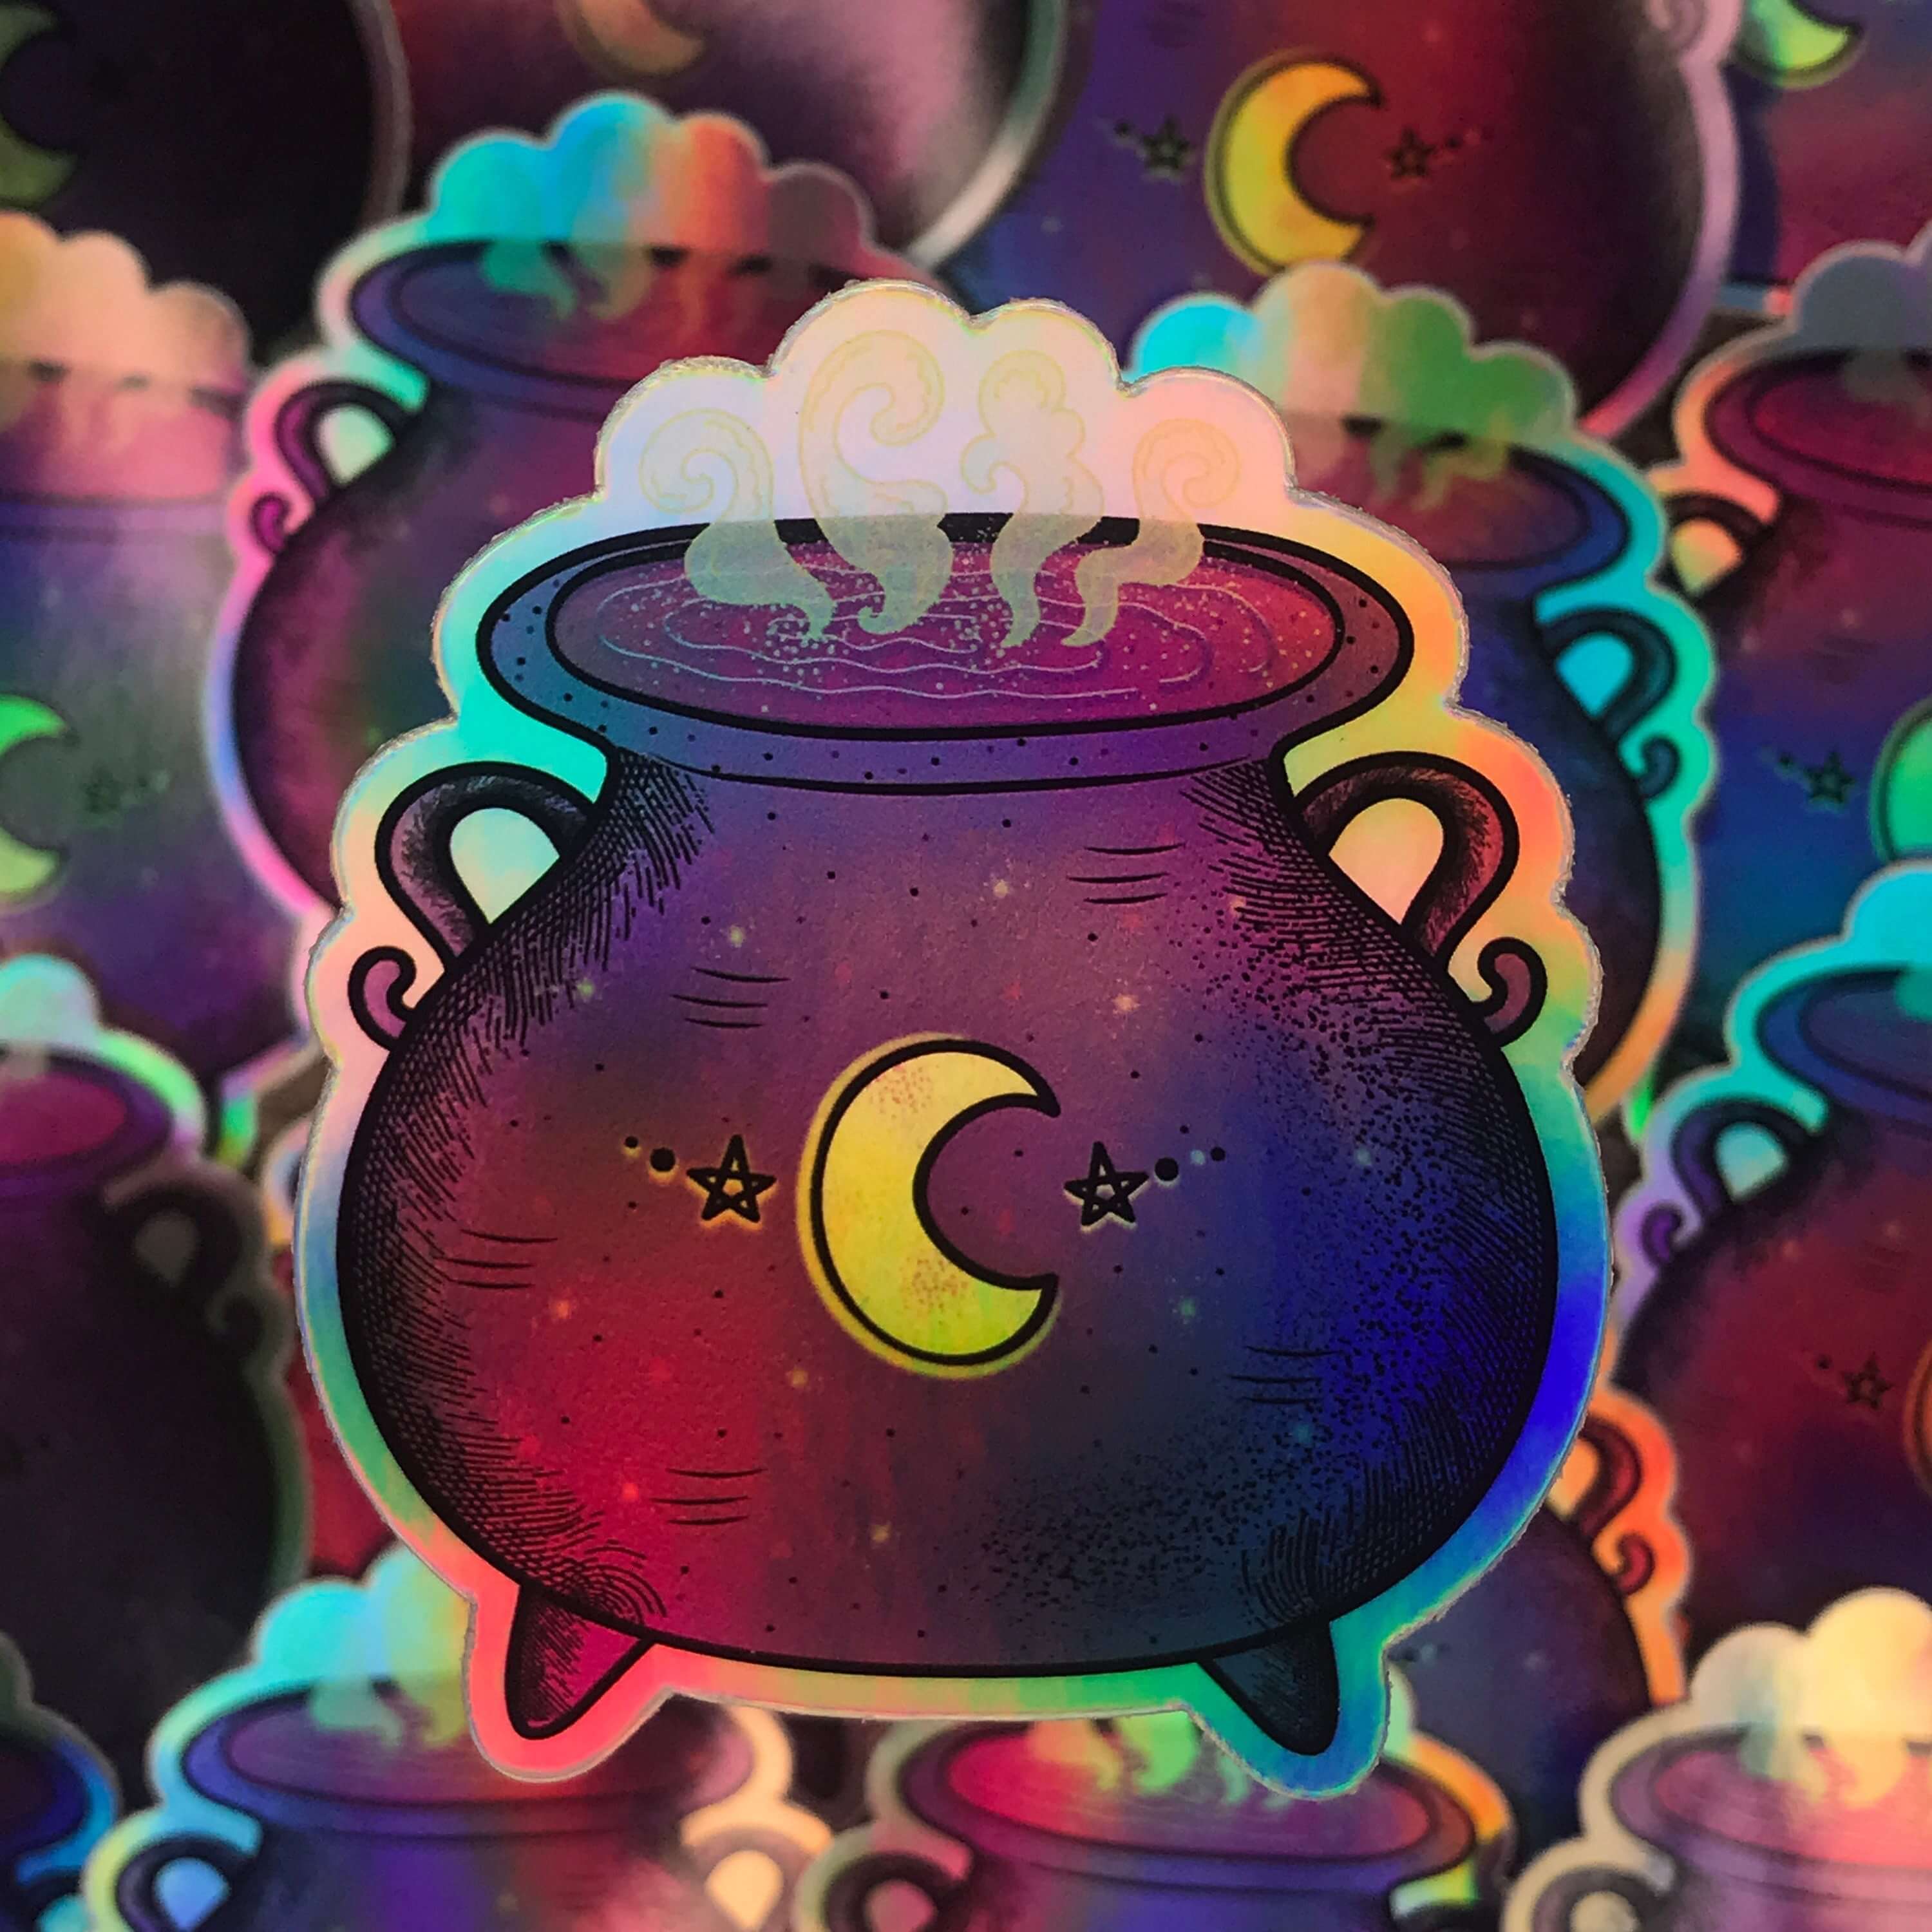 Cauldron Holographic Sticker by Kia Creates Bubbling Cauldron Stickers